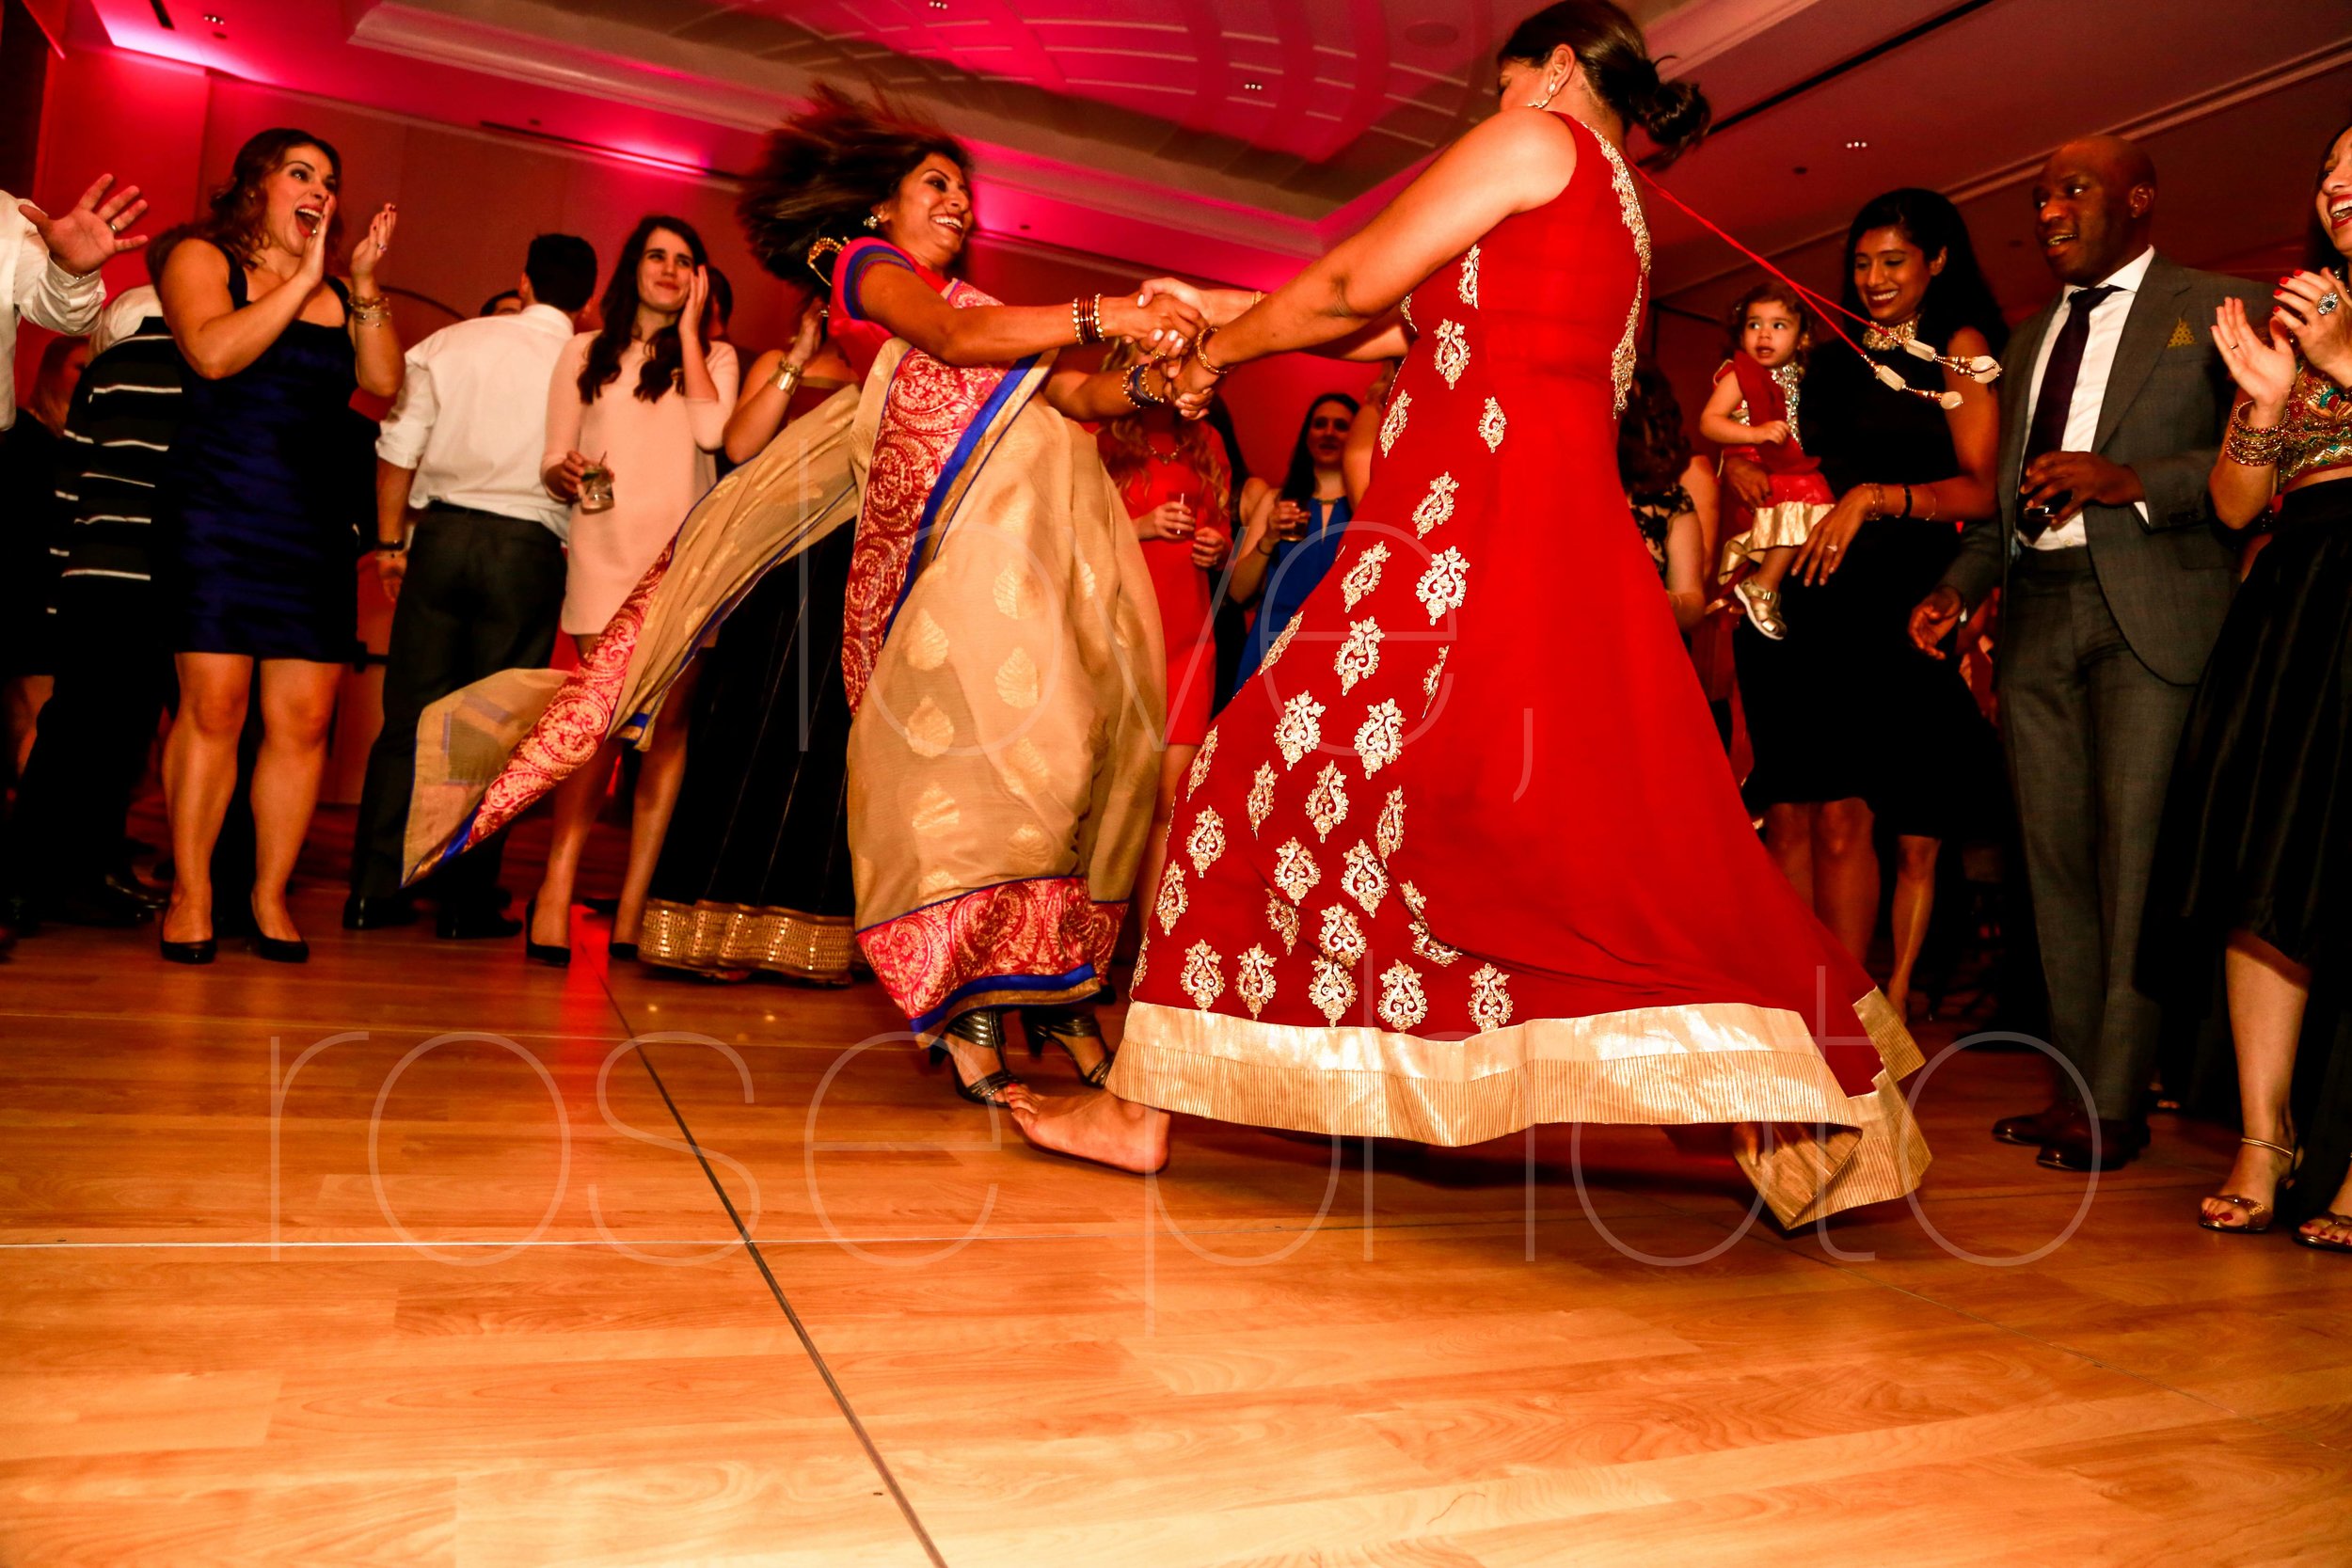 Best of Chicago wedidngphotography LondonHouse Indian wedding -33.jpg